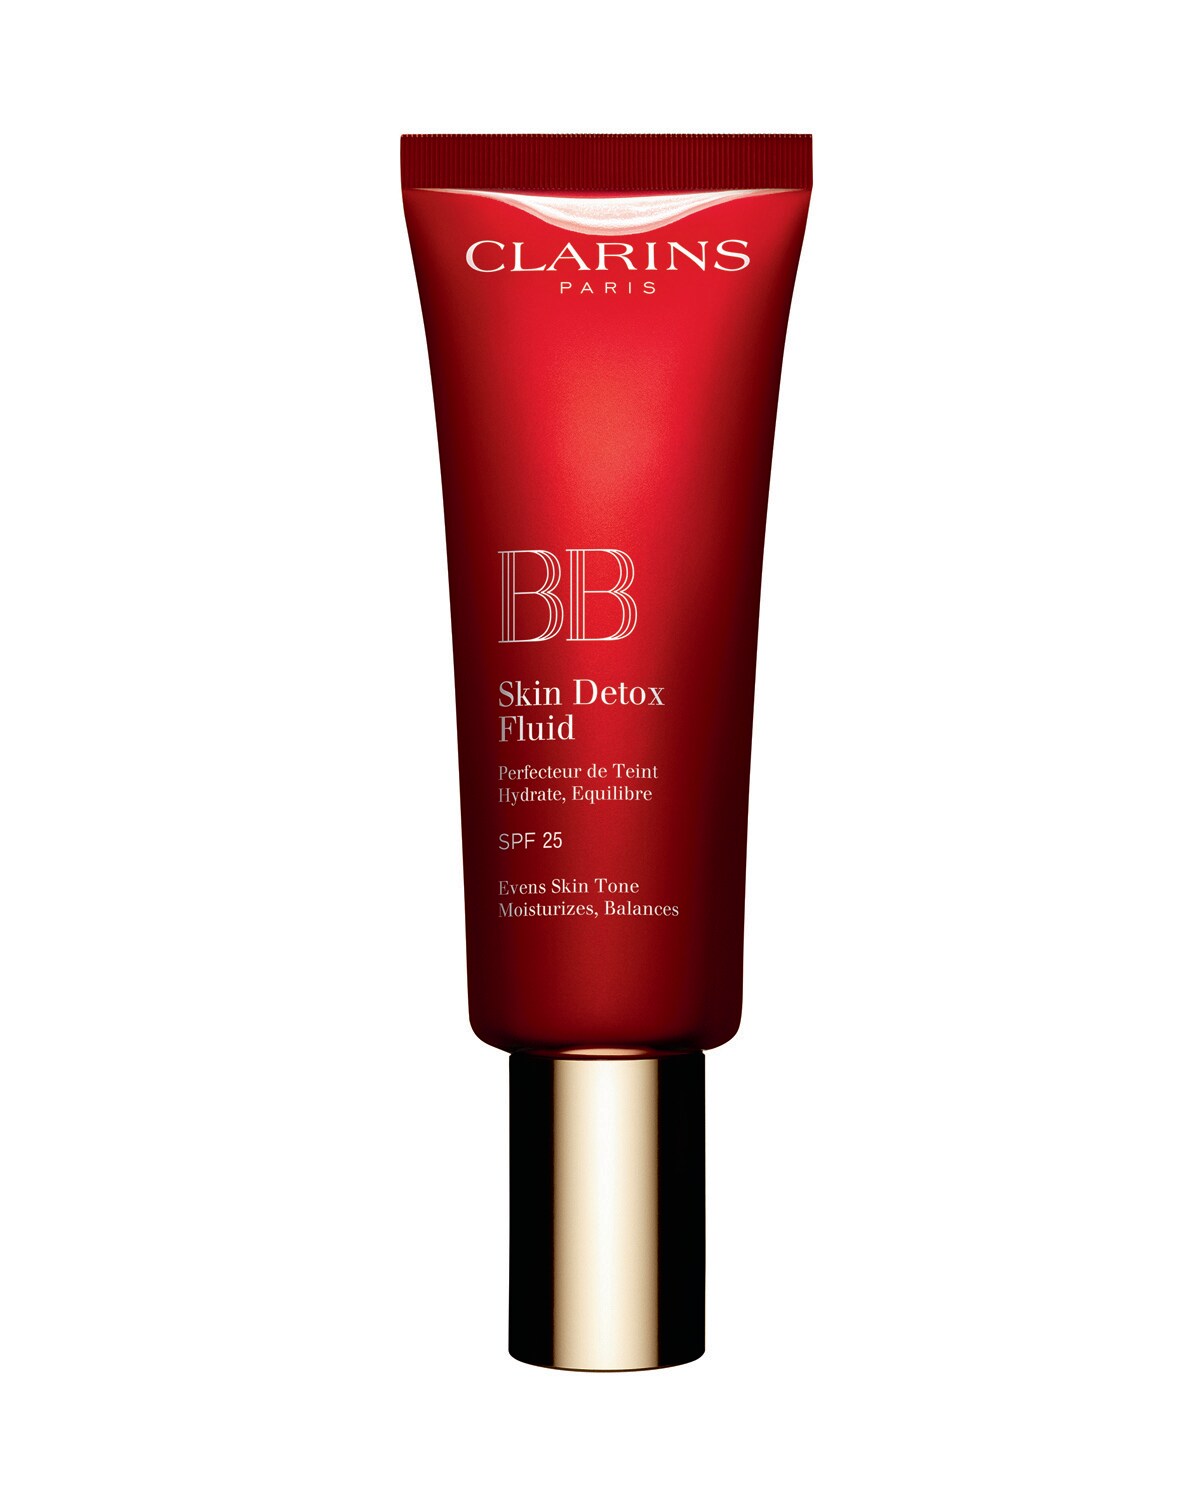 BB Skin Detox Fluid SPF 25 de Clarins